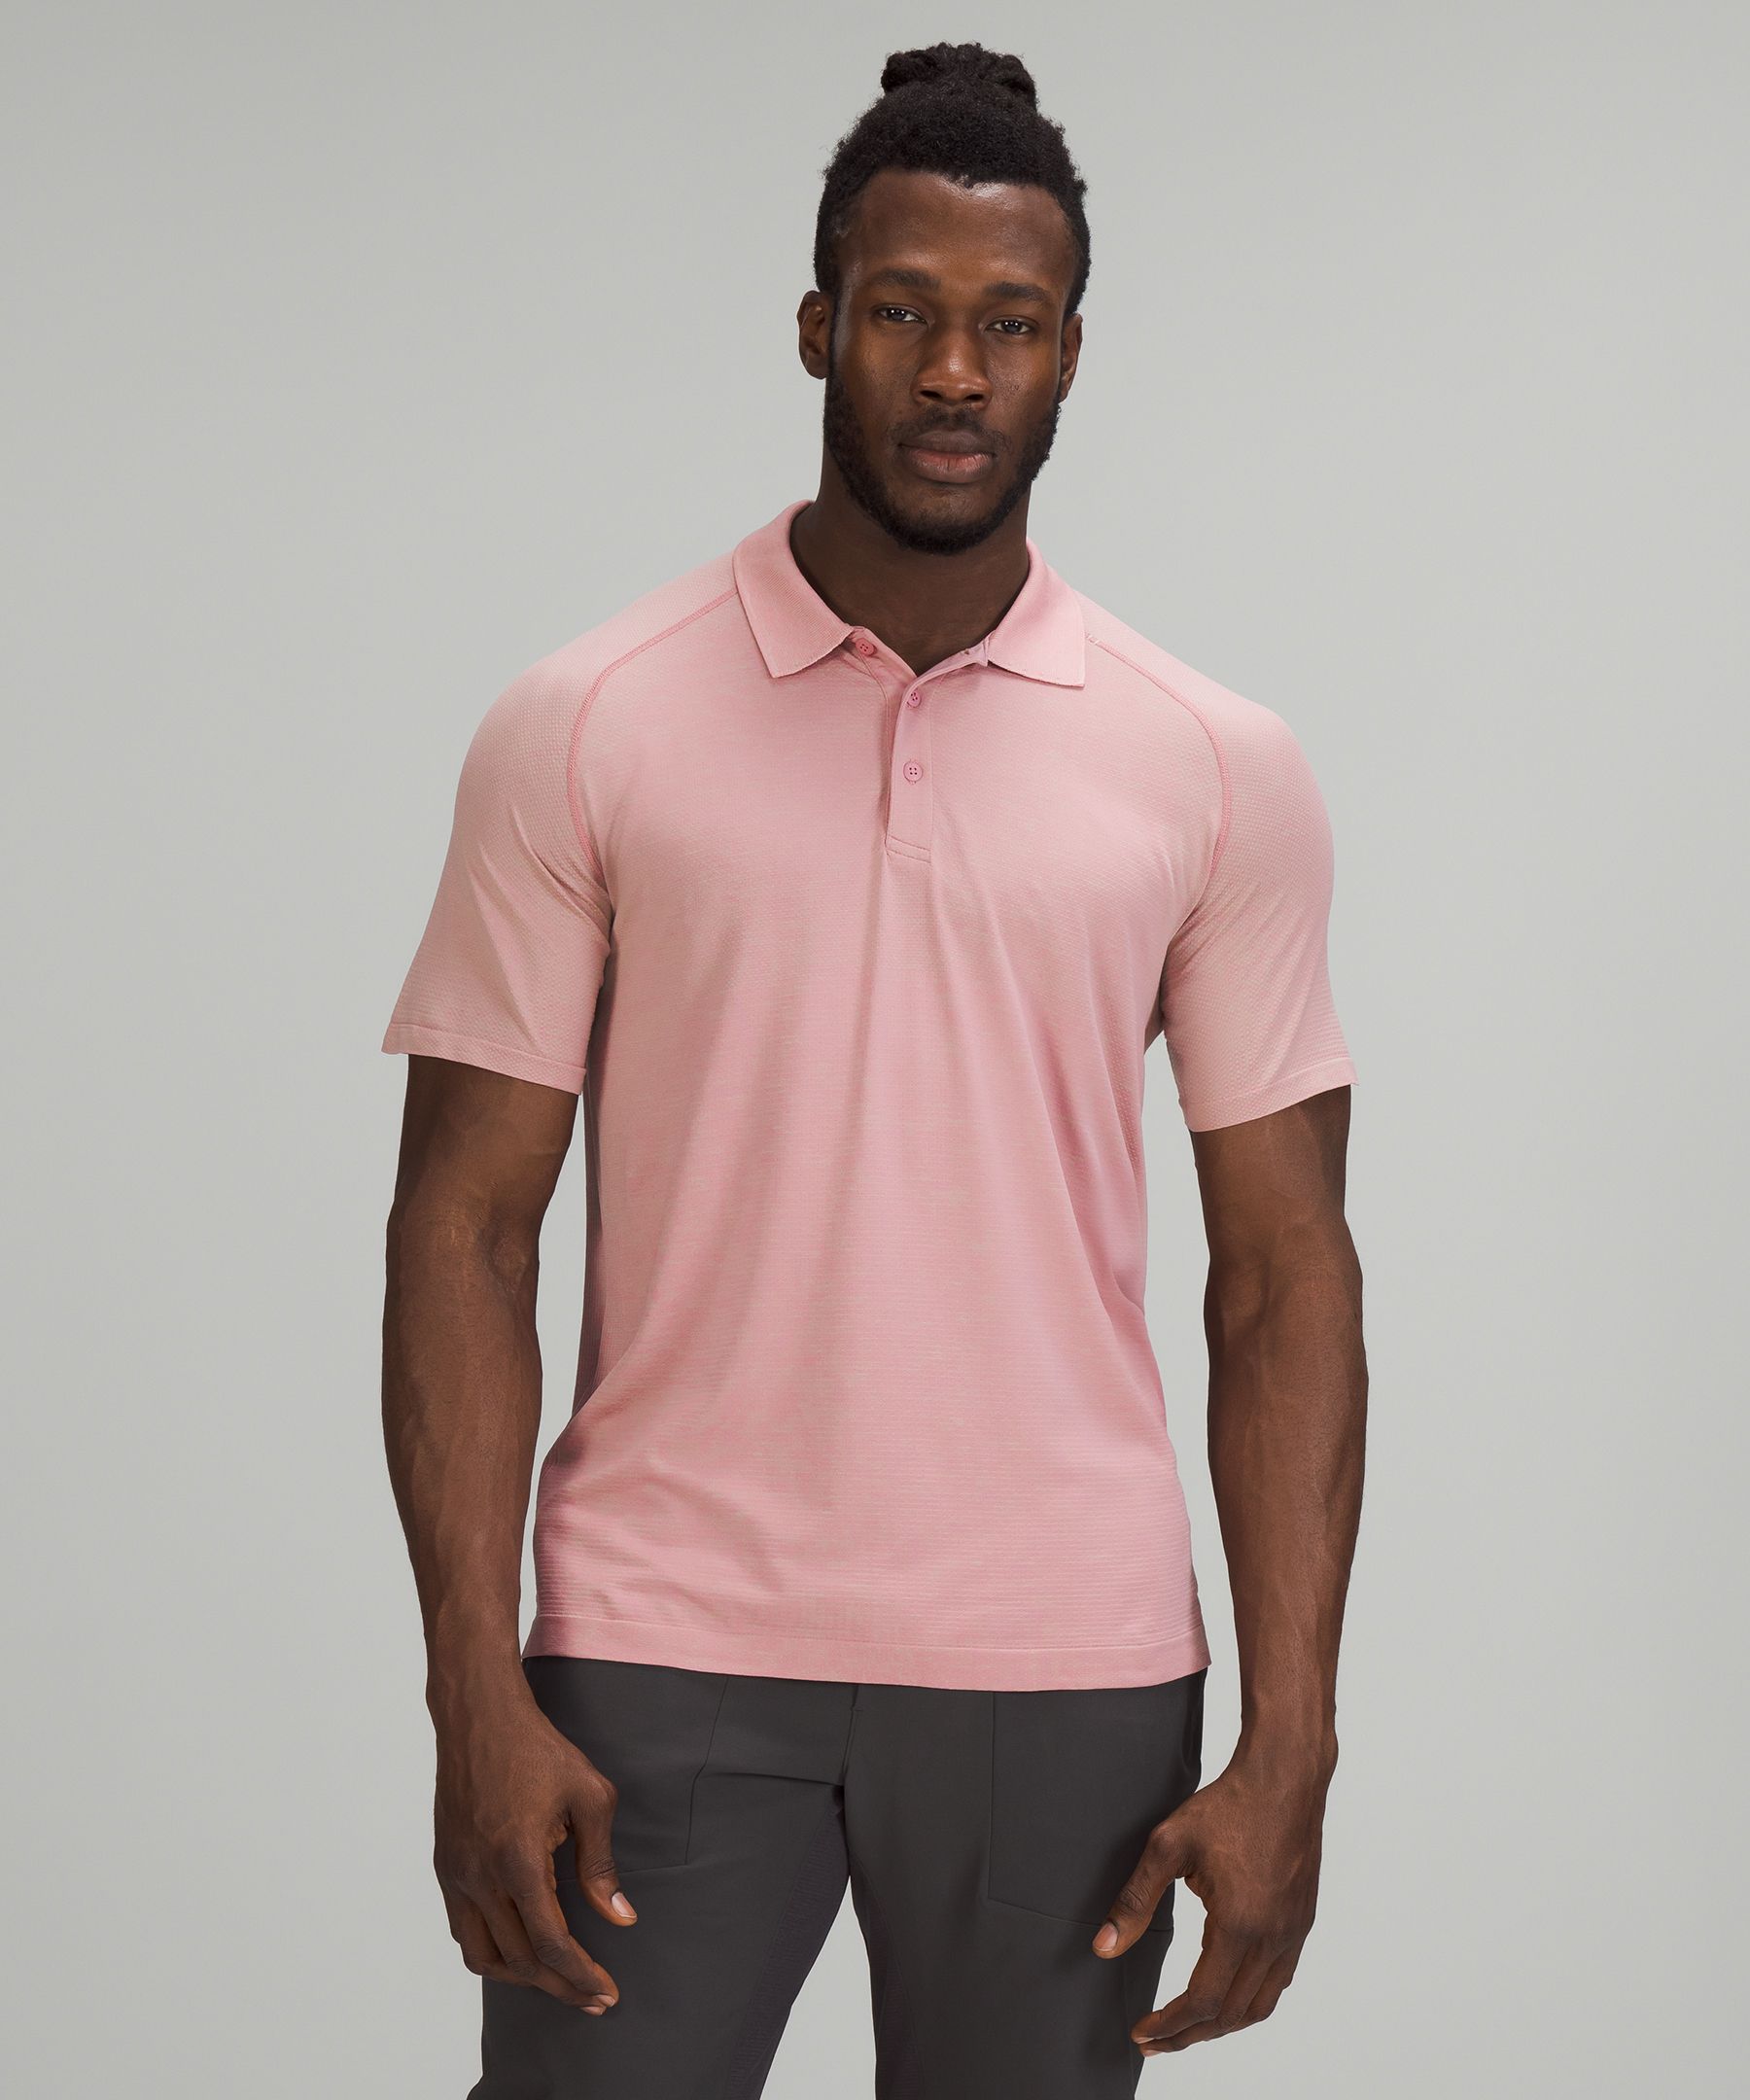 Lululemon Metal Vent Tech Polo Shirt 2.0 In Pink